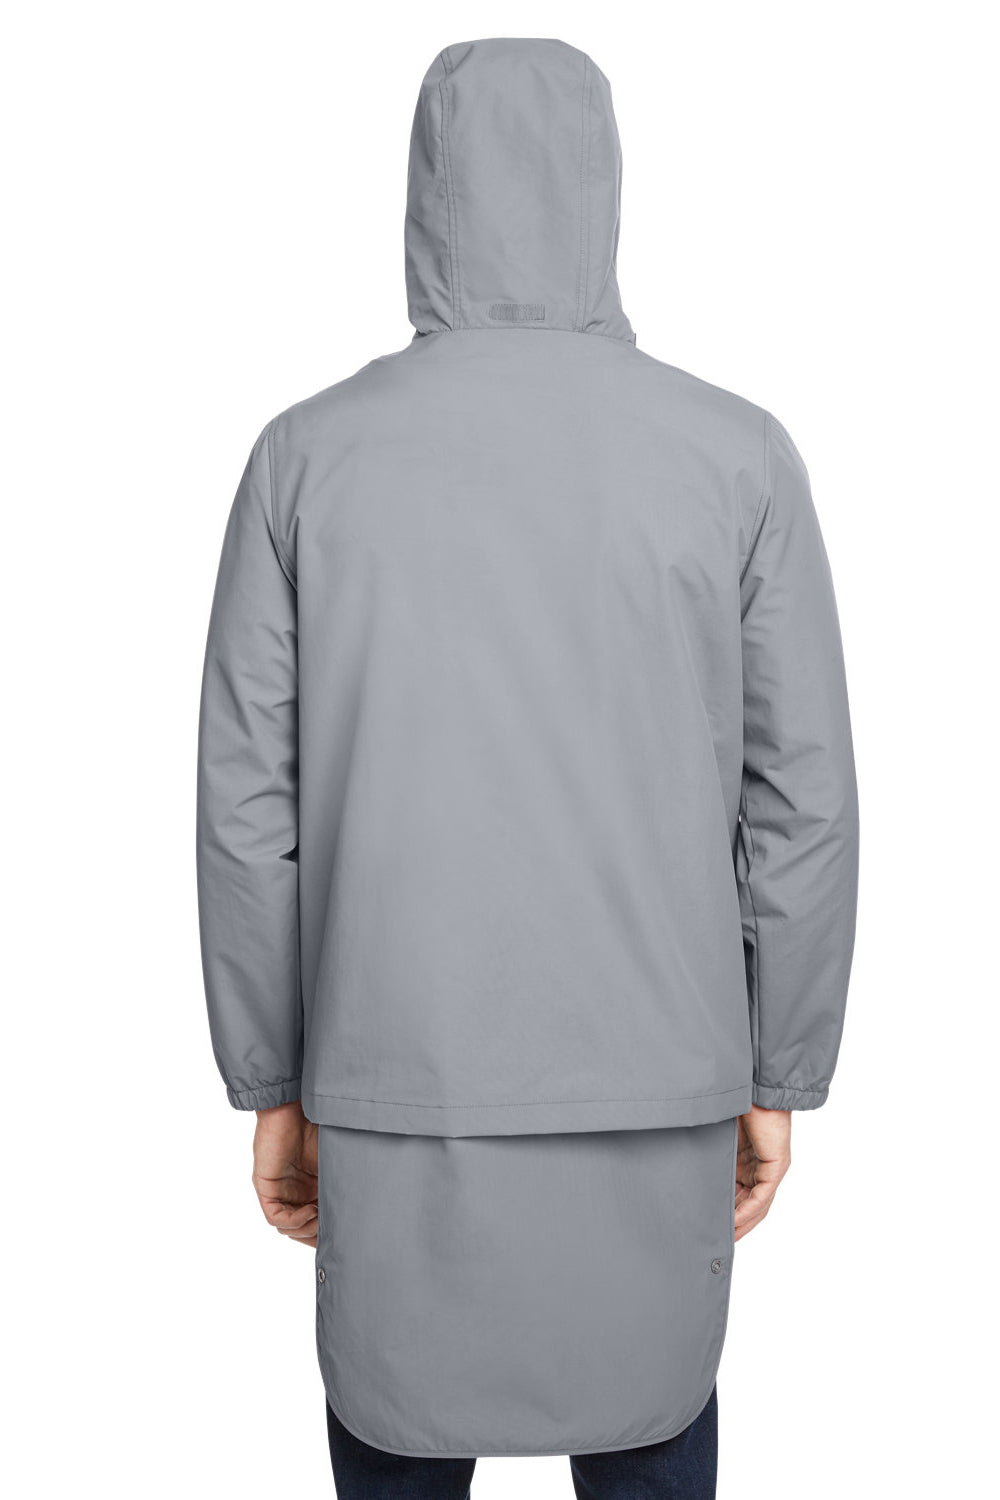 Team 365 TT87 Mens Zone HydroSport Full Zip Hooded Jacket Graphite Grey Back